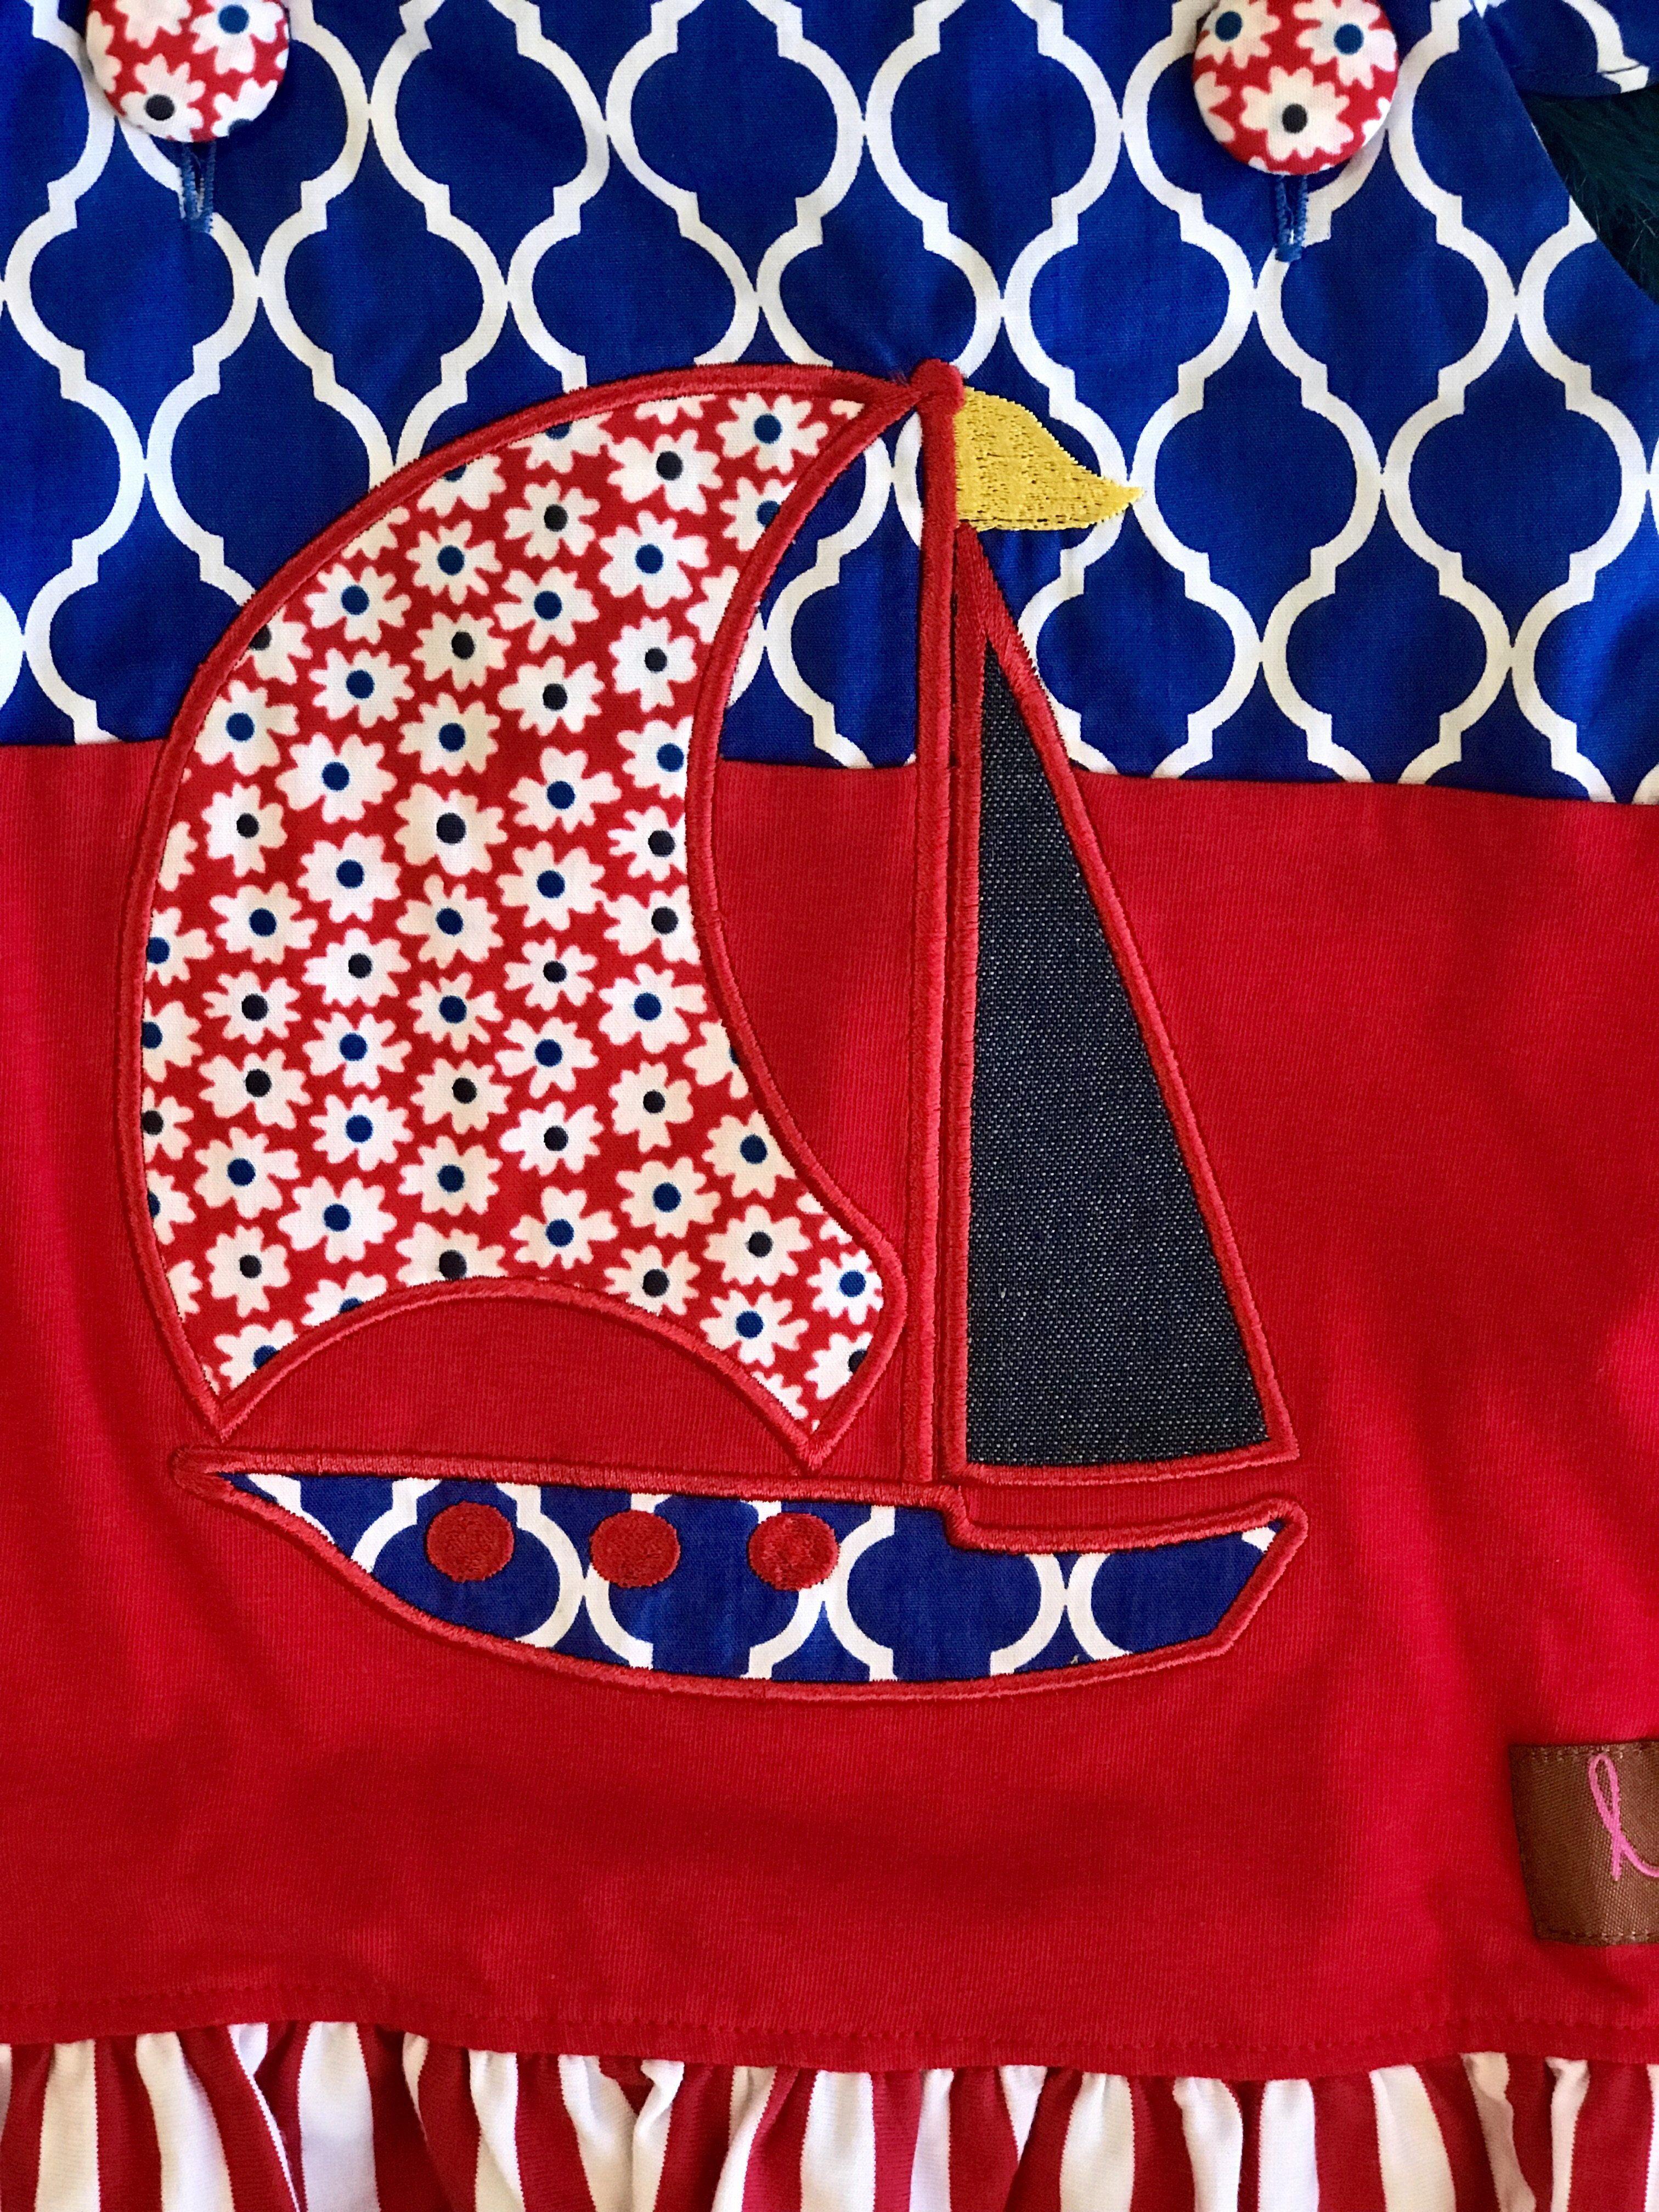 Red White Blue Sail Logo - Millie Jay Summer Fun Red White Blue Sail Boat Shorts Set